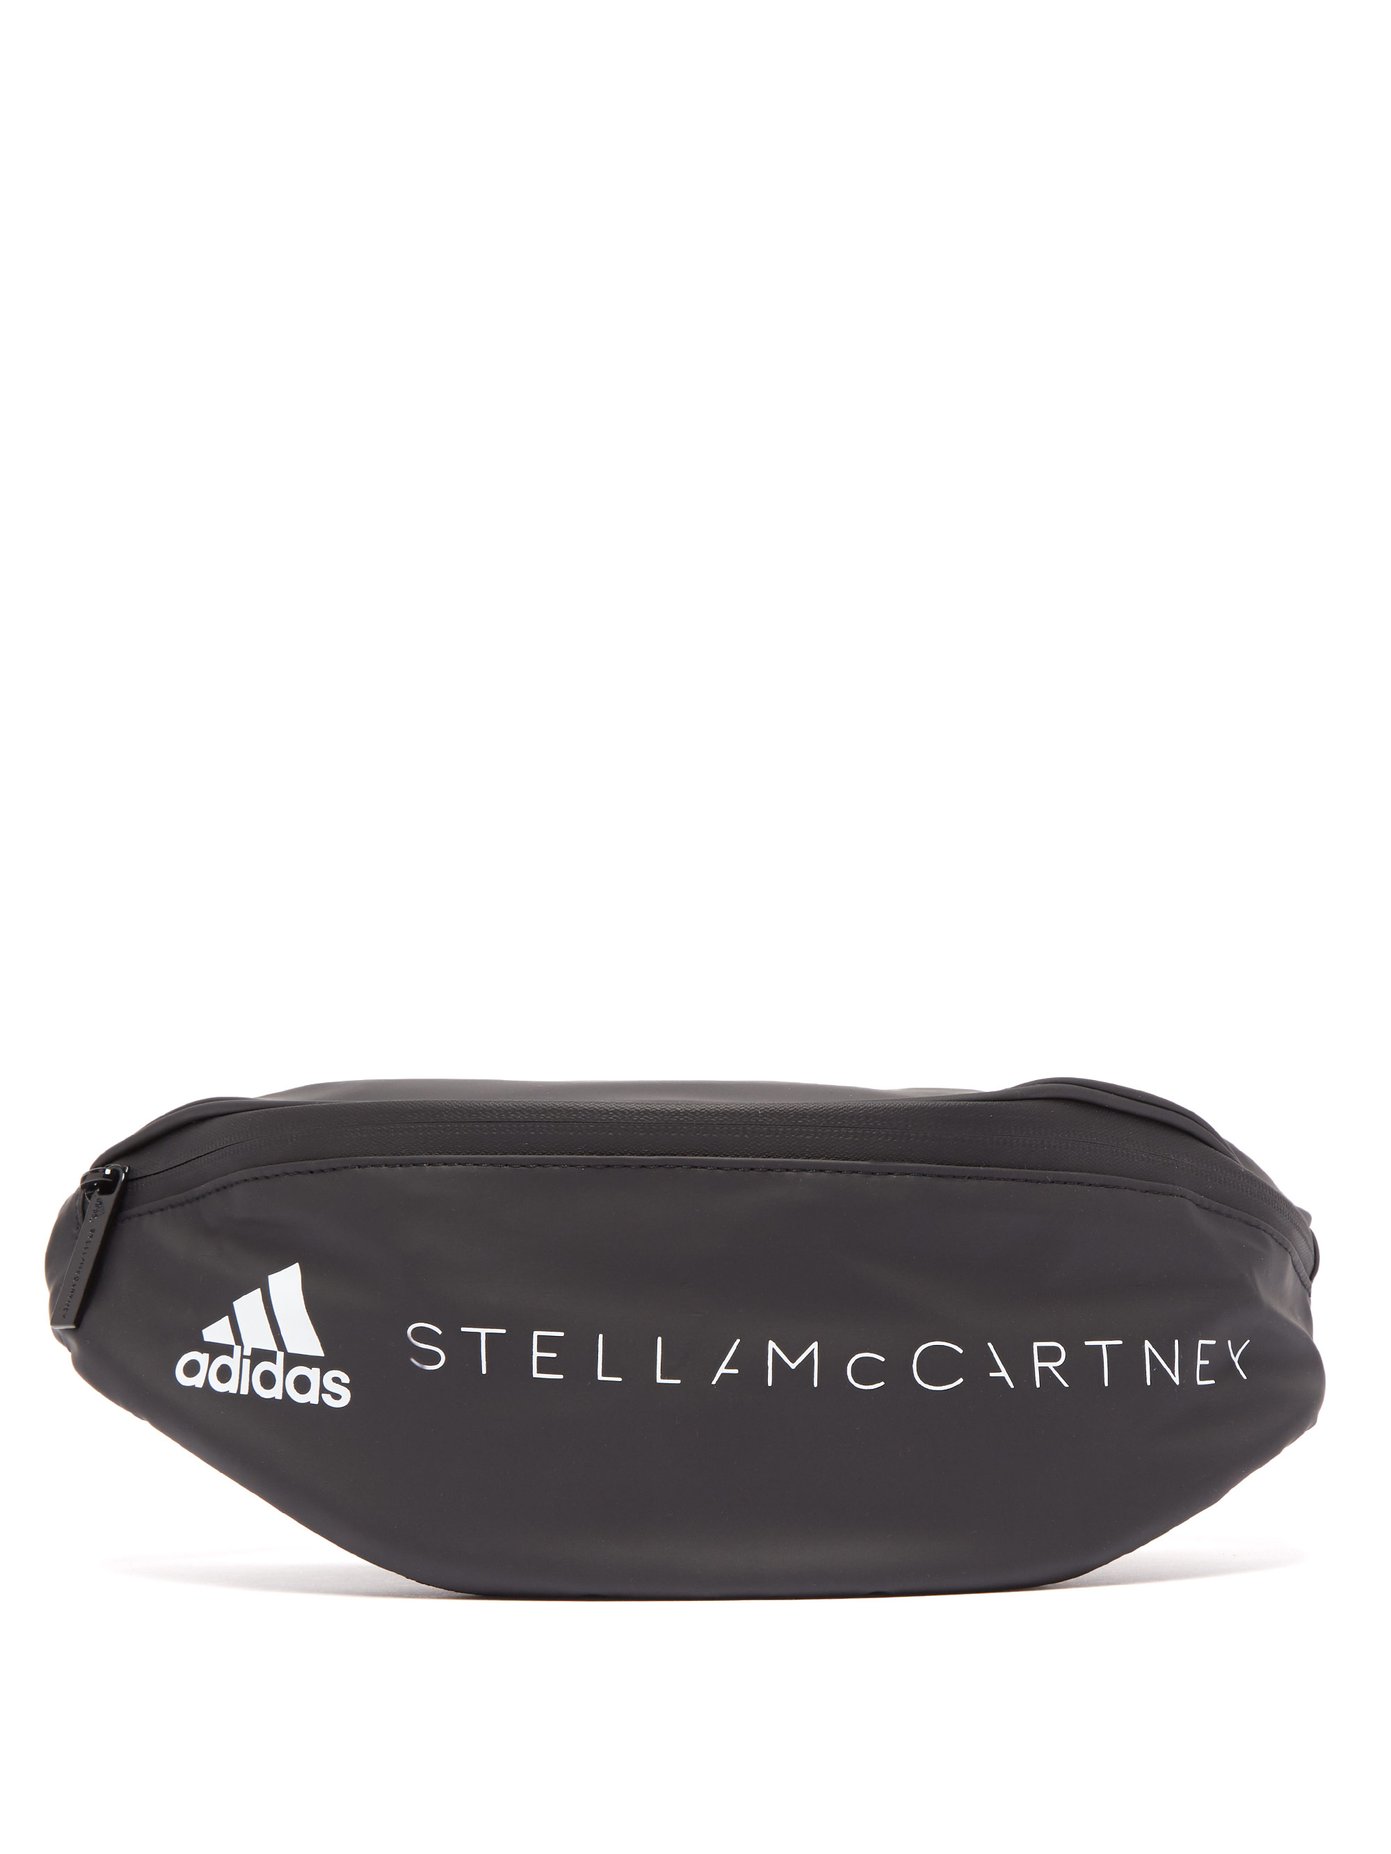 adidas stella mccartney belt bag